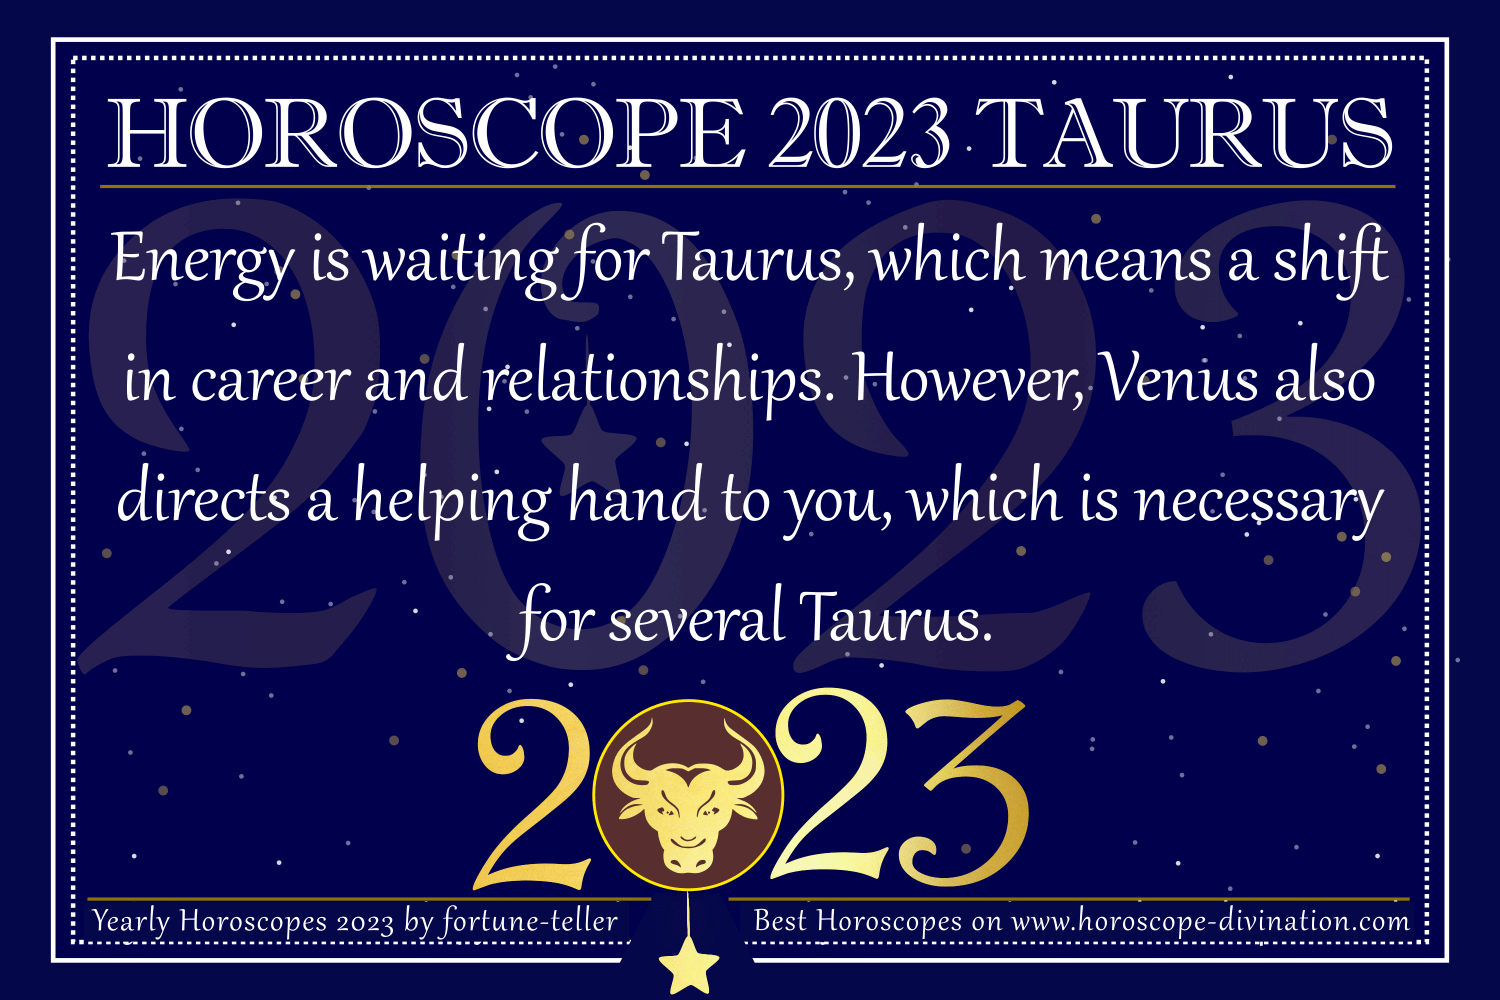 Horoscope 2023 Taurus Yearly Forecast & Future